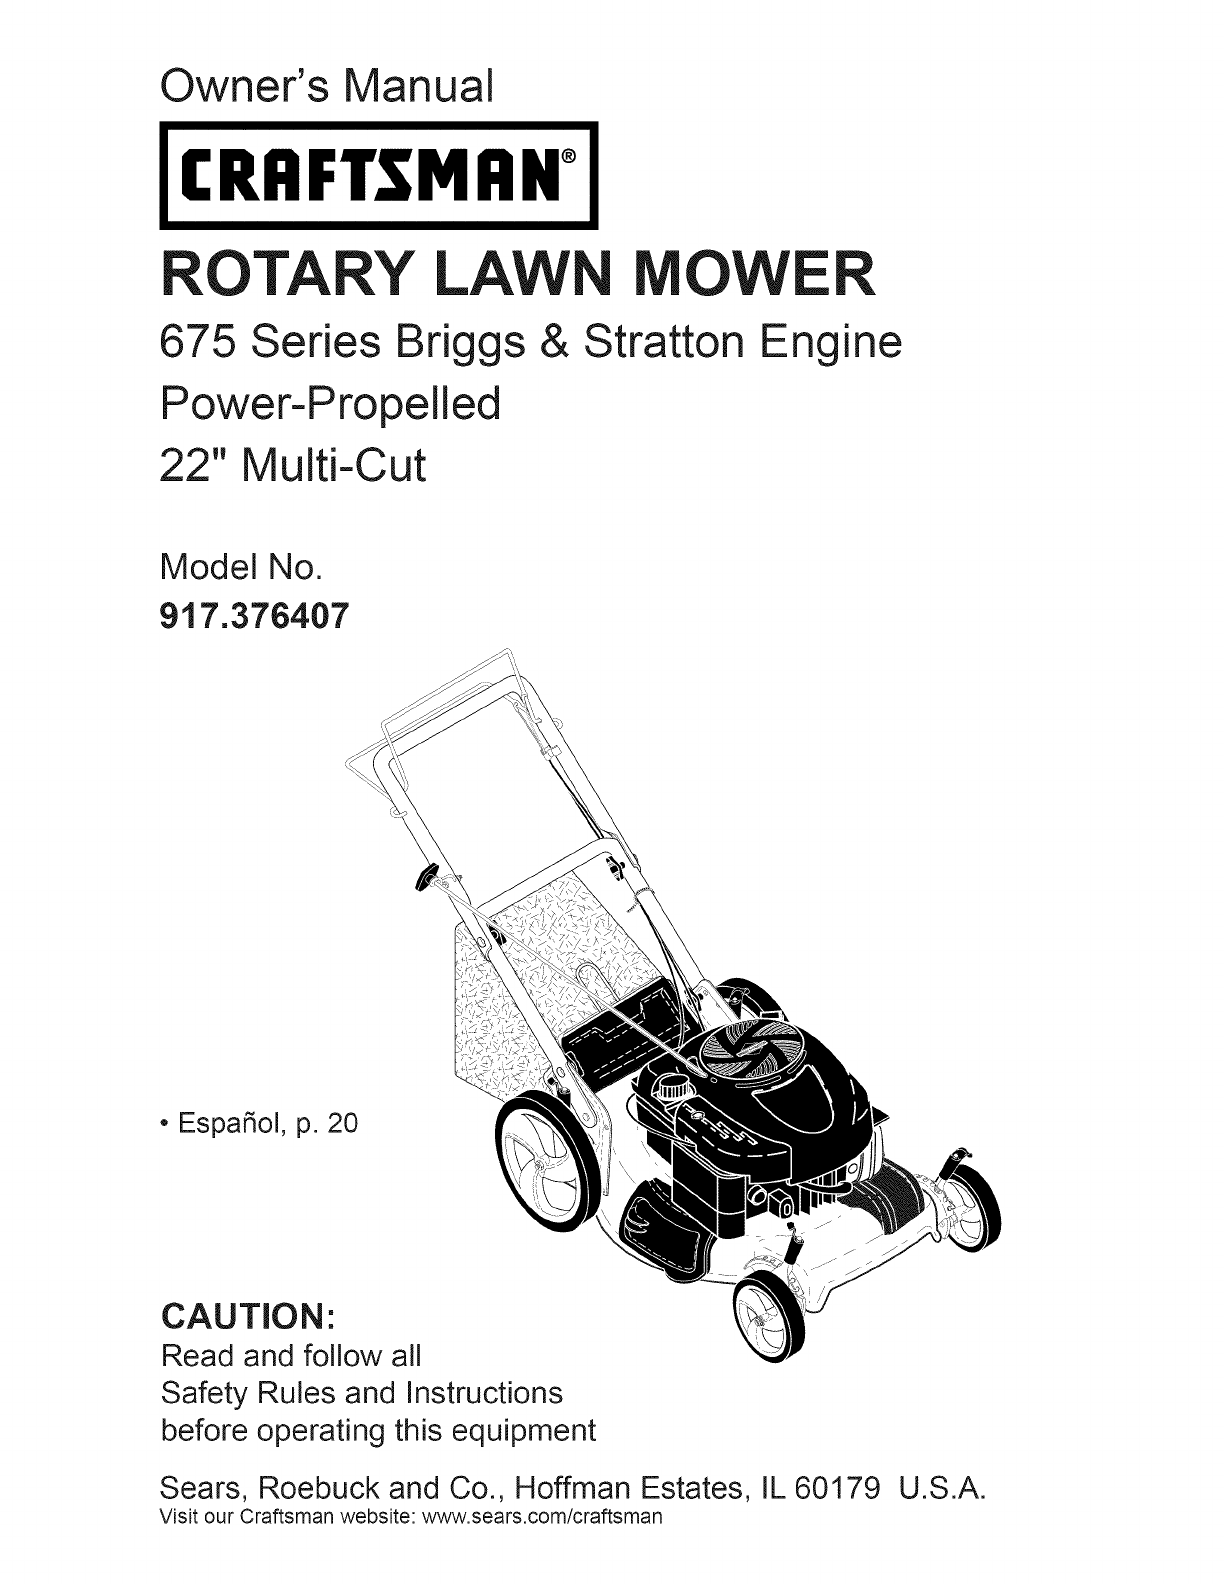 Craftsman Lawn Mower 917.376407 User Guide | ManualsOnline.com